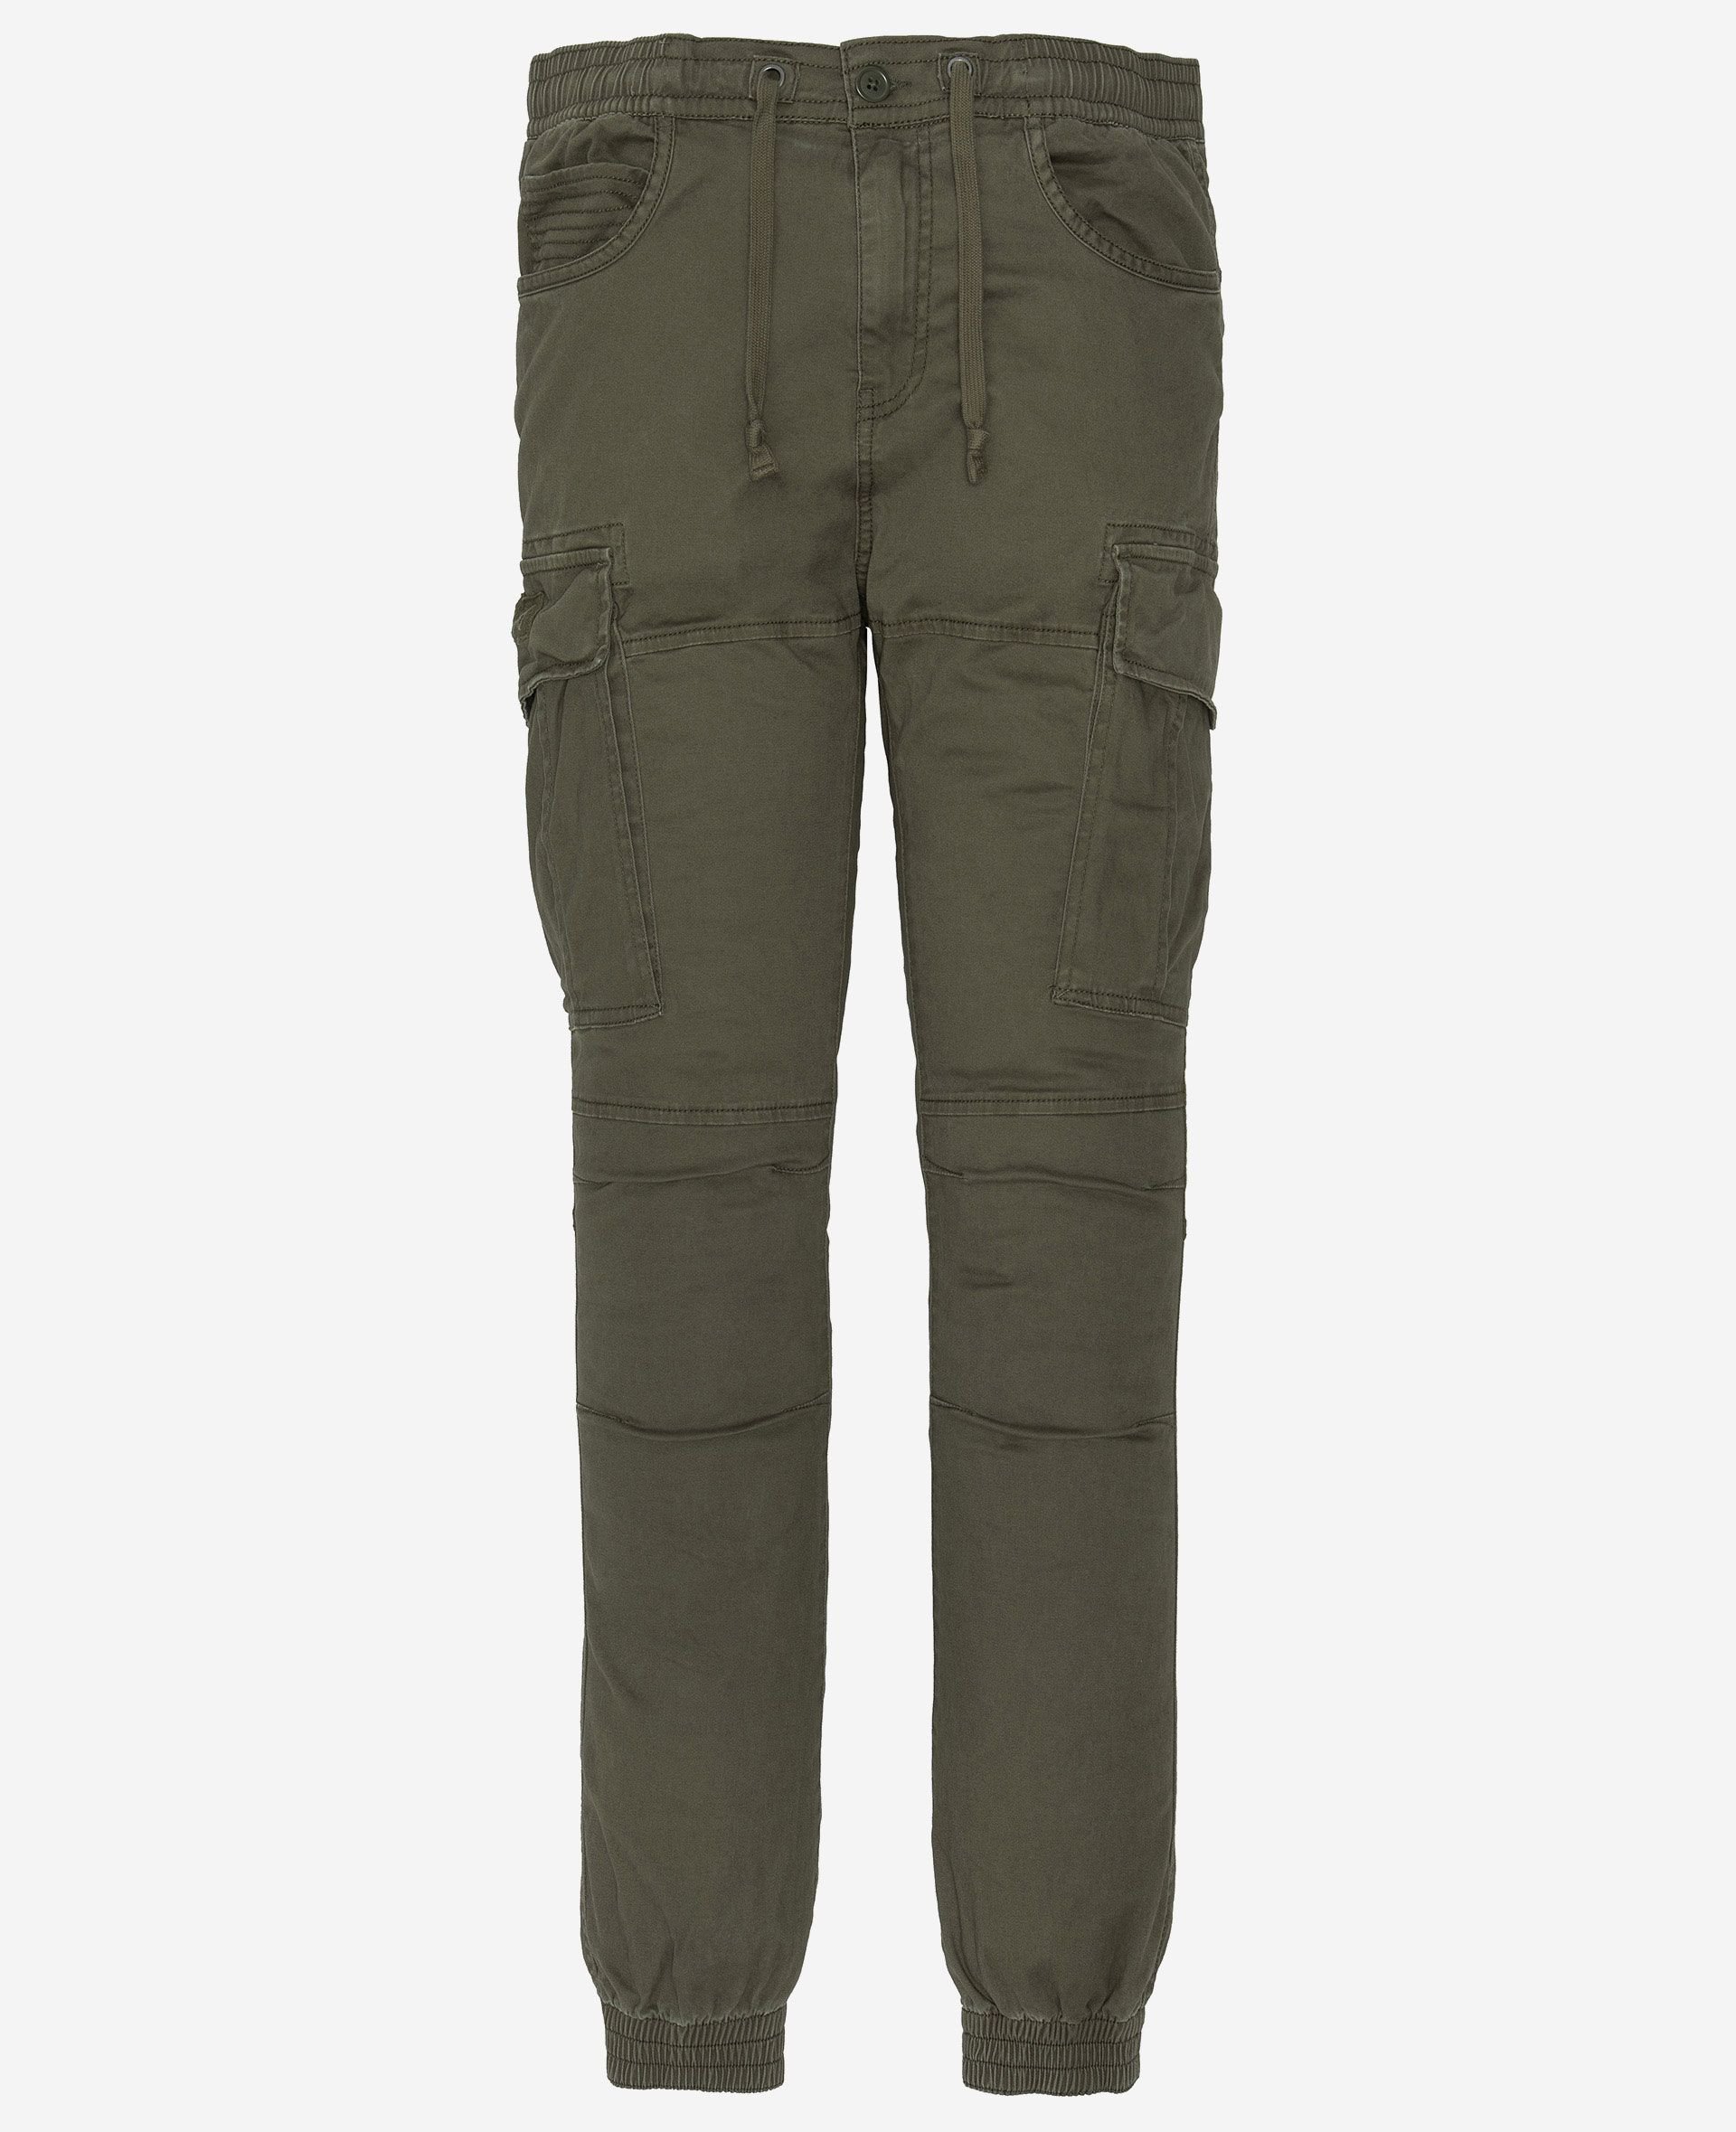 Pantalons sport/streetwear  Schott TRRELAX70 KAKI